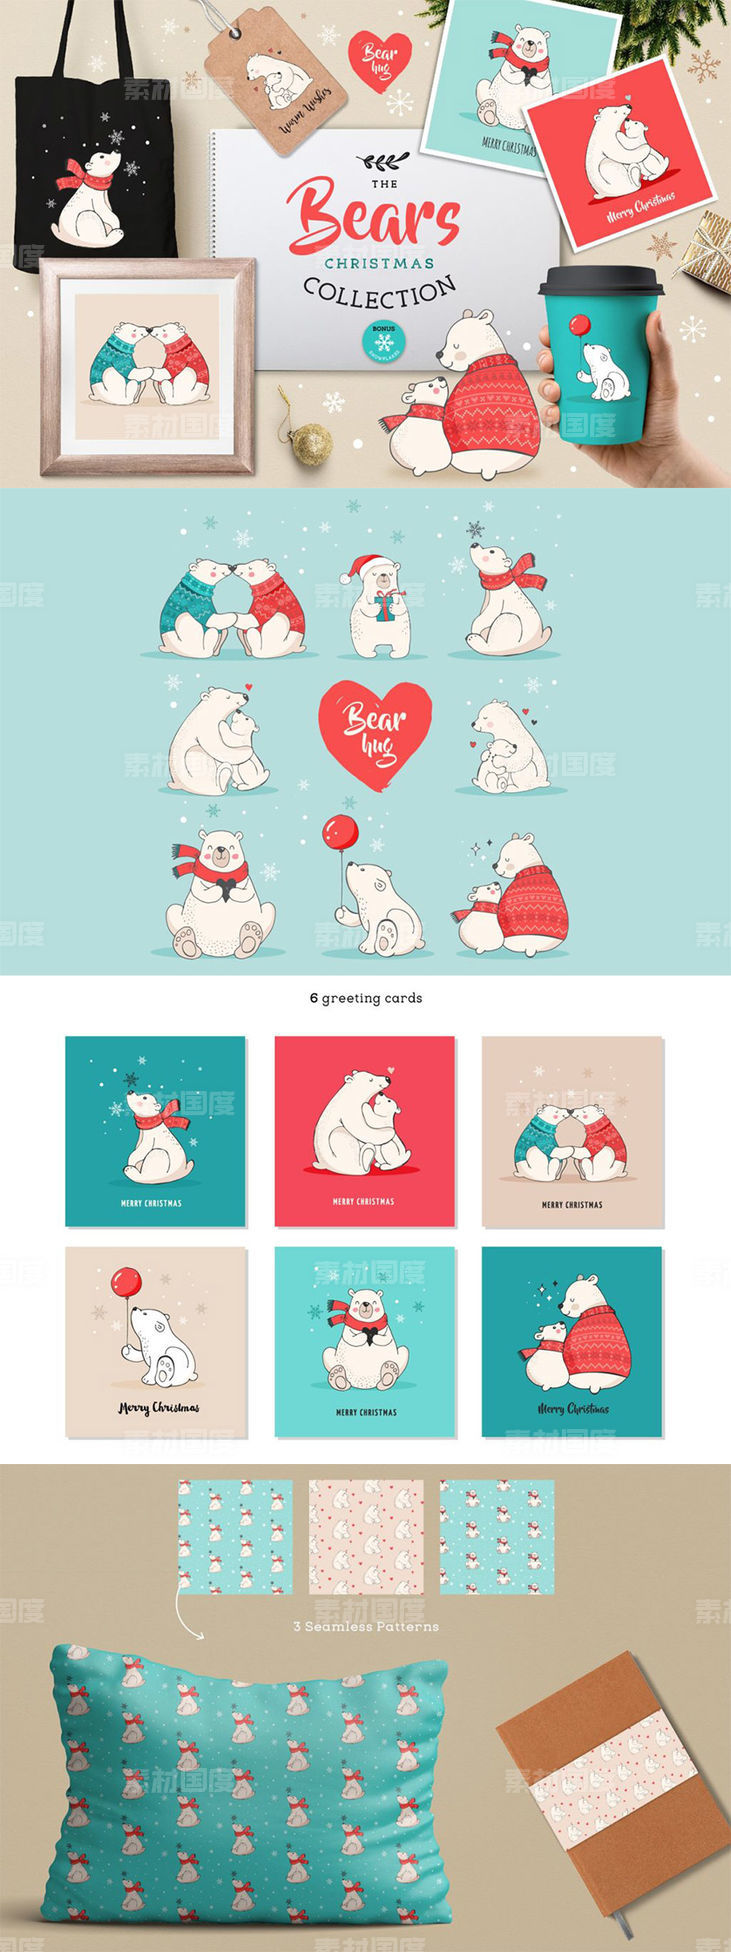 北极熊圣诞主题插画素材 Polar Bears Christmas illustrations